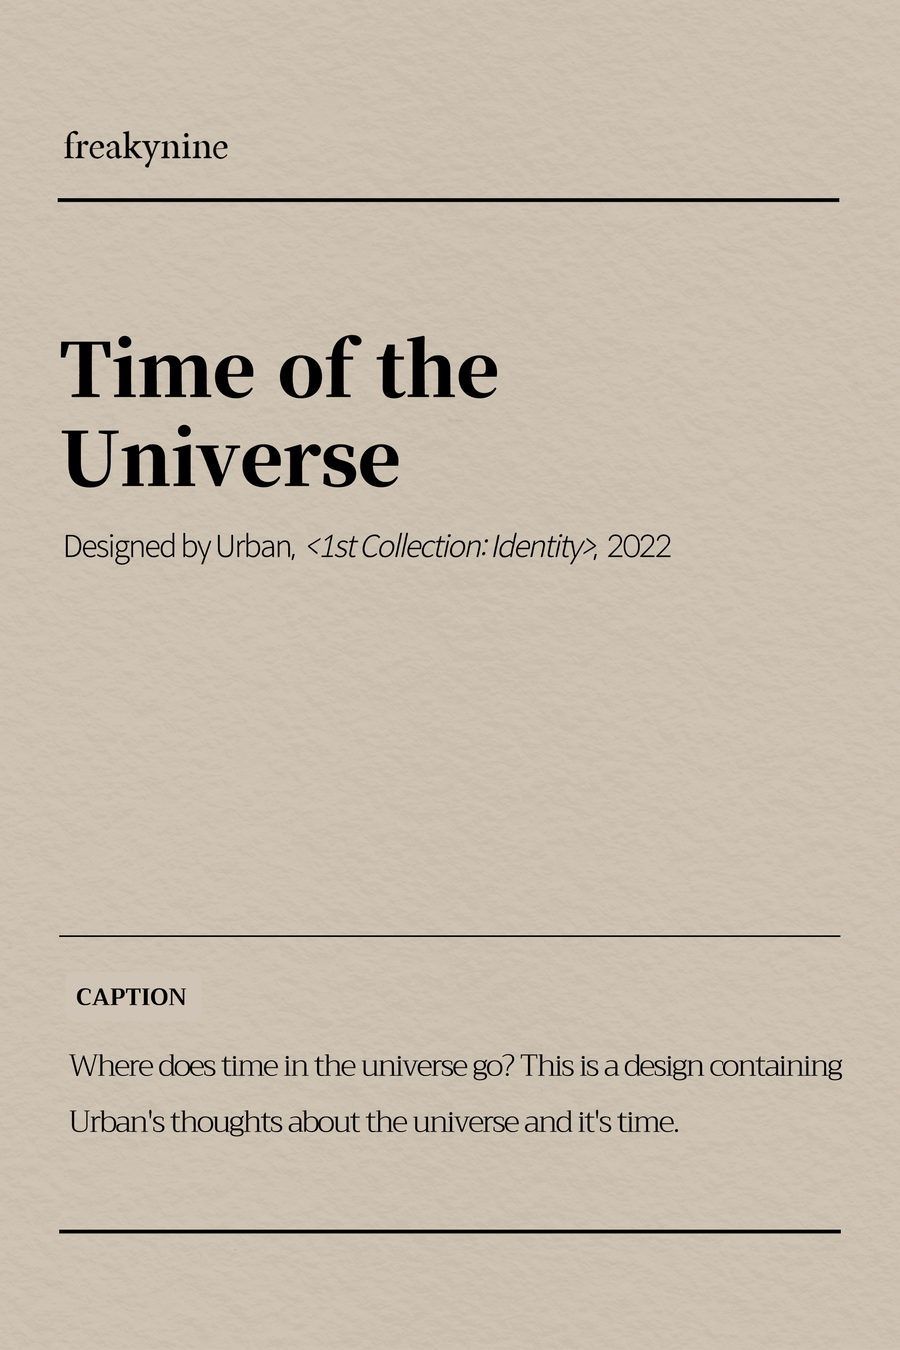 (Urban) Time of the Universe (2EA) - freakynine